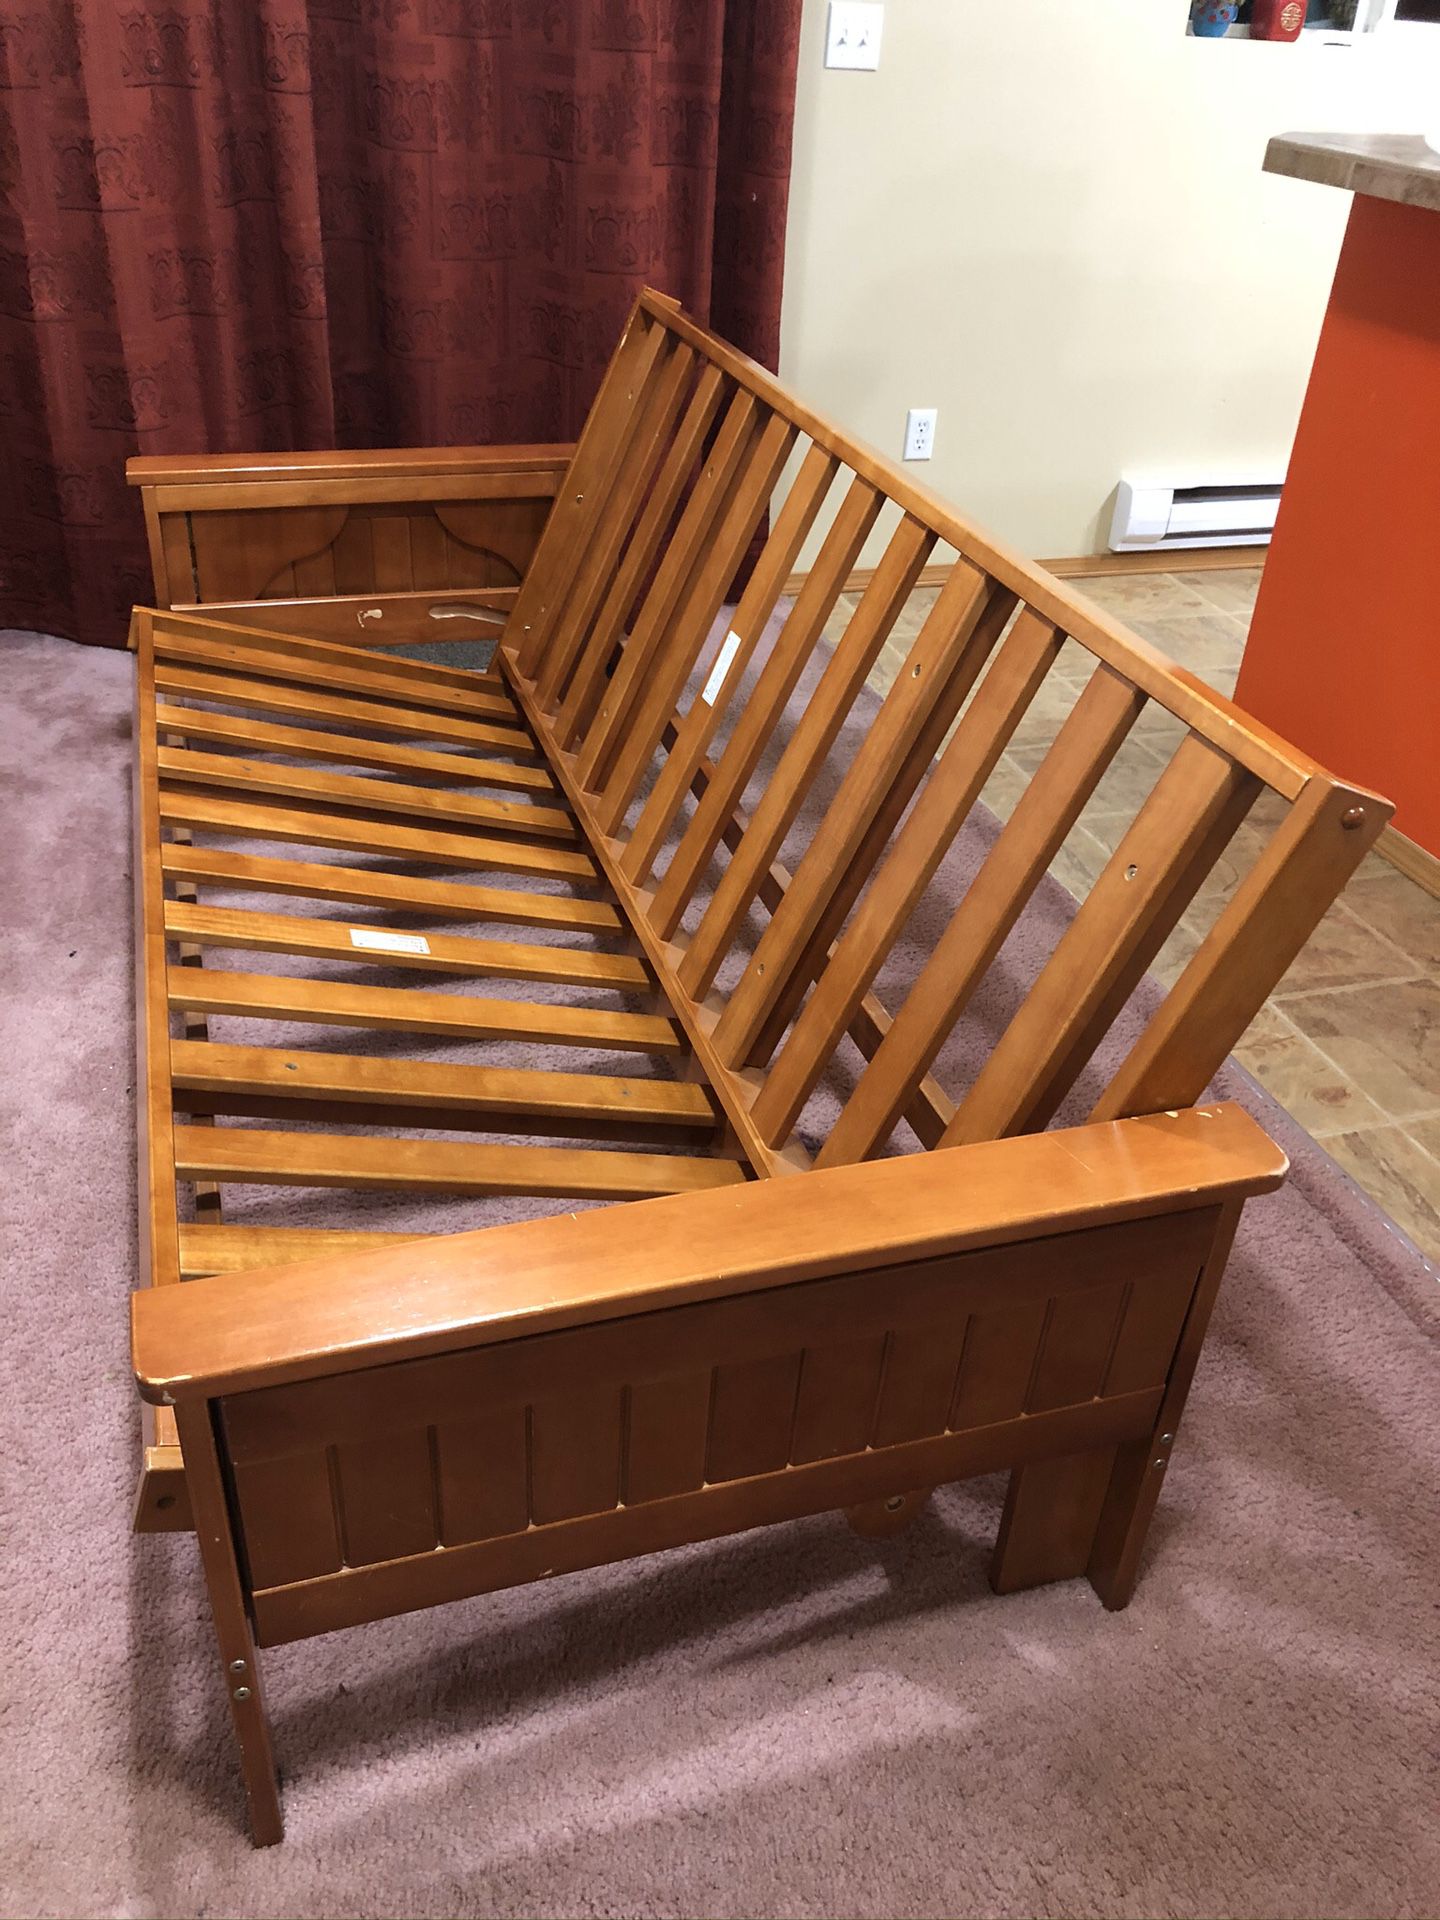 Solid wood Sofa & Bed frame